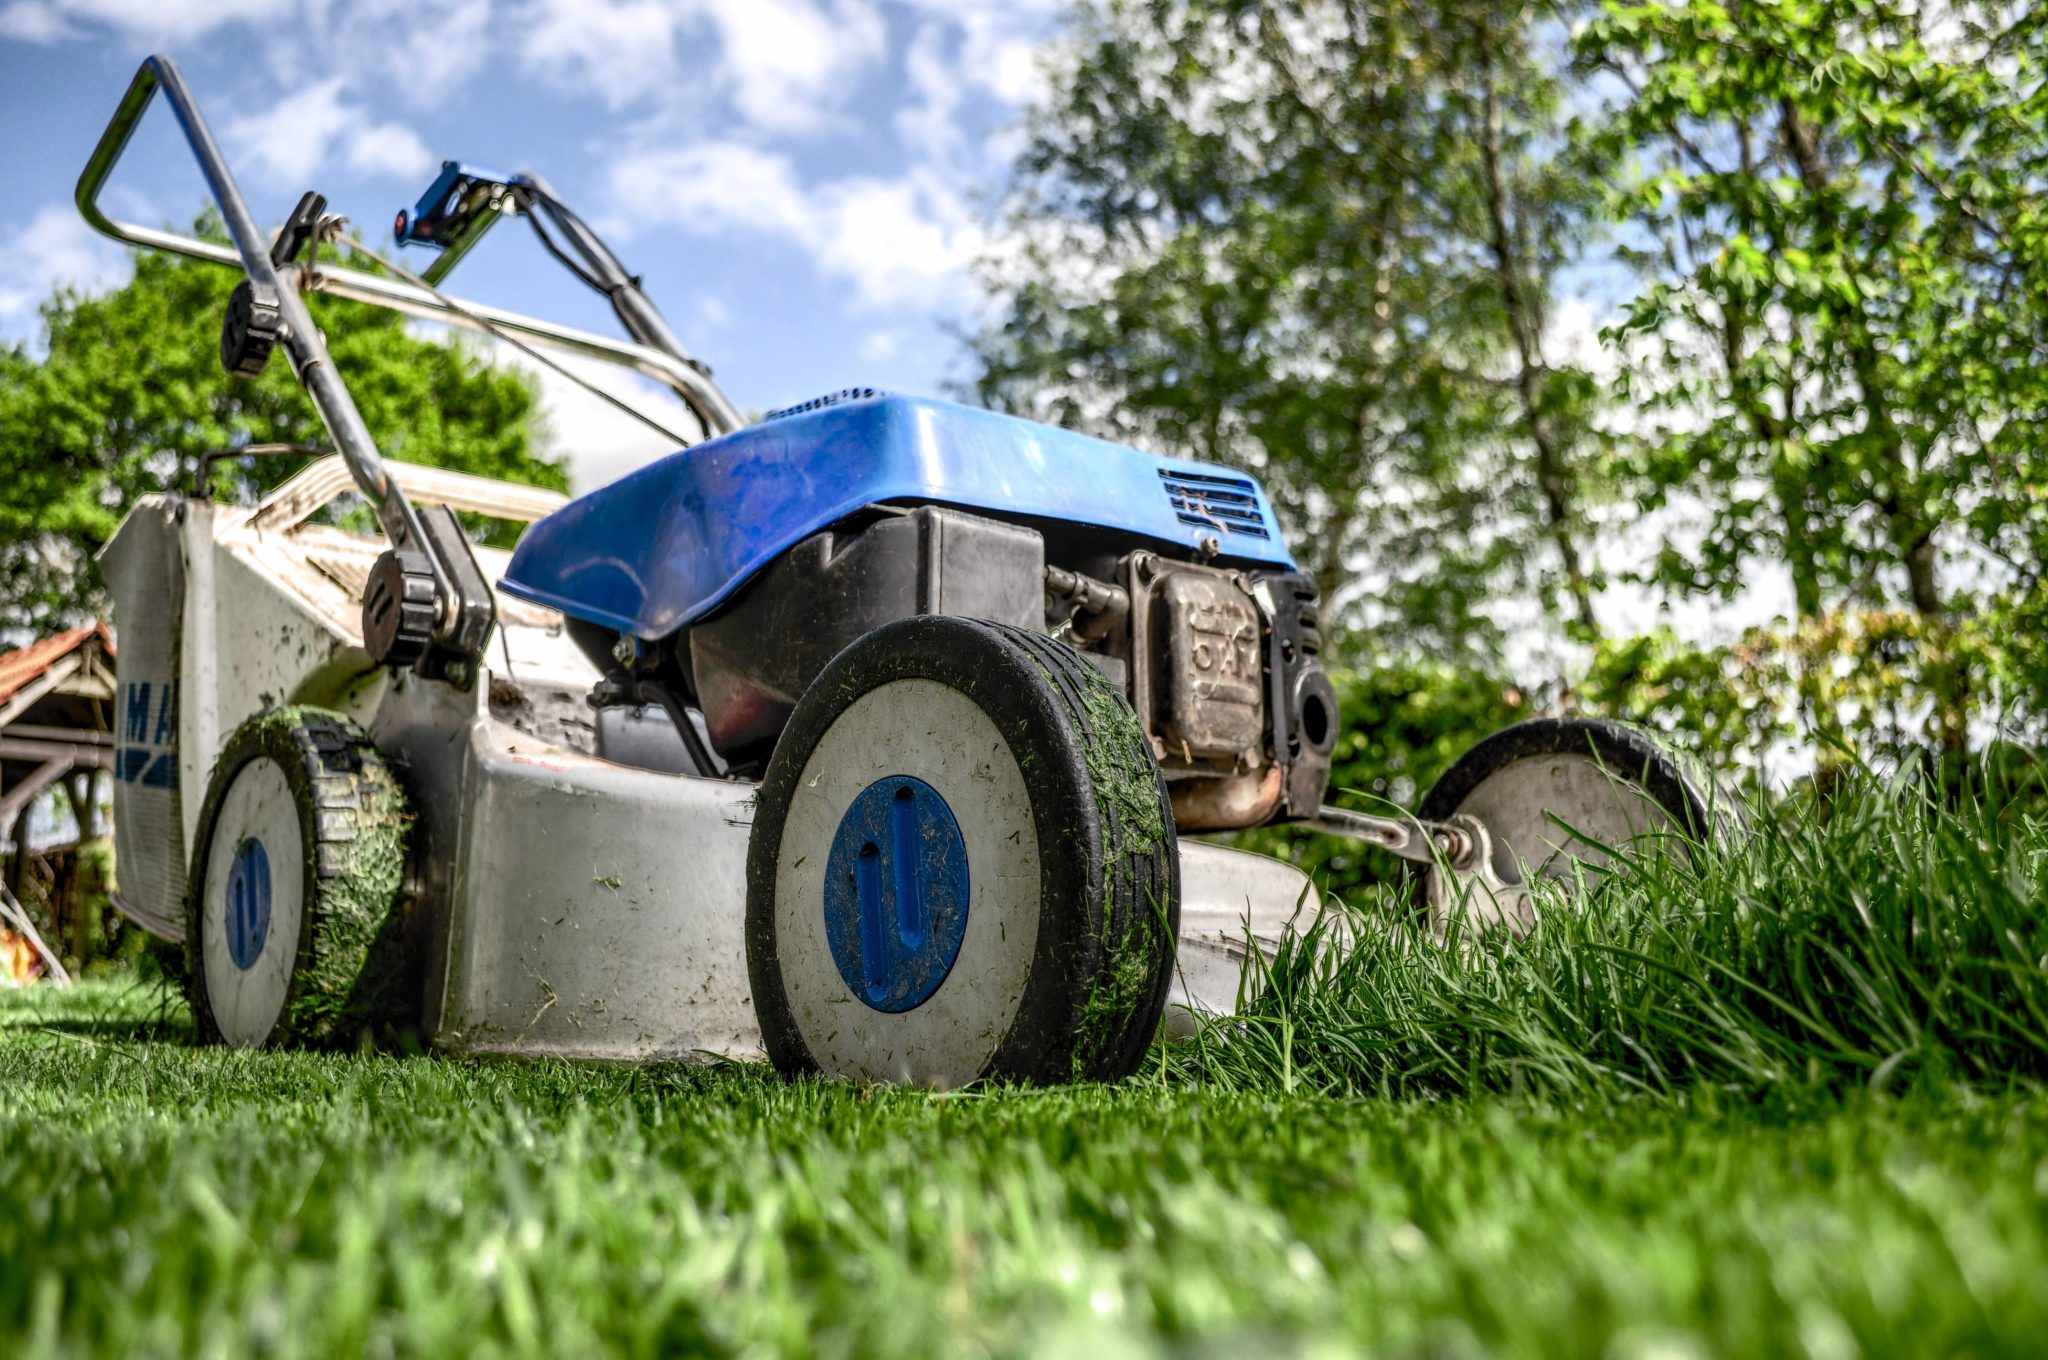 Lawnmower in a yard